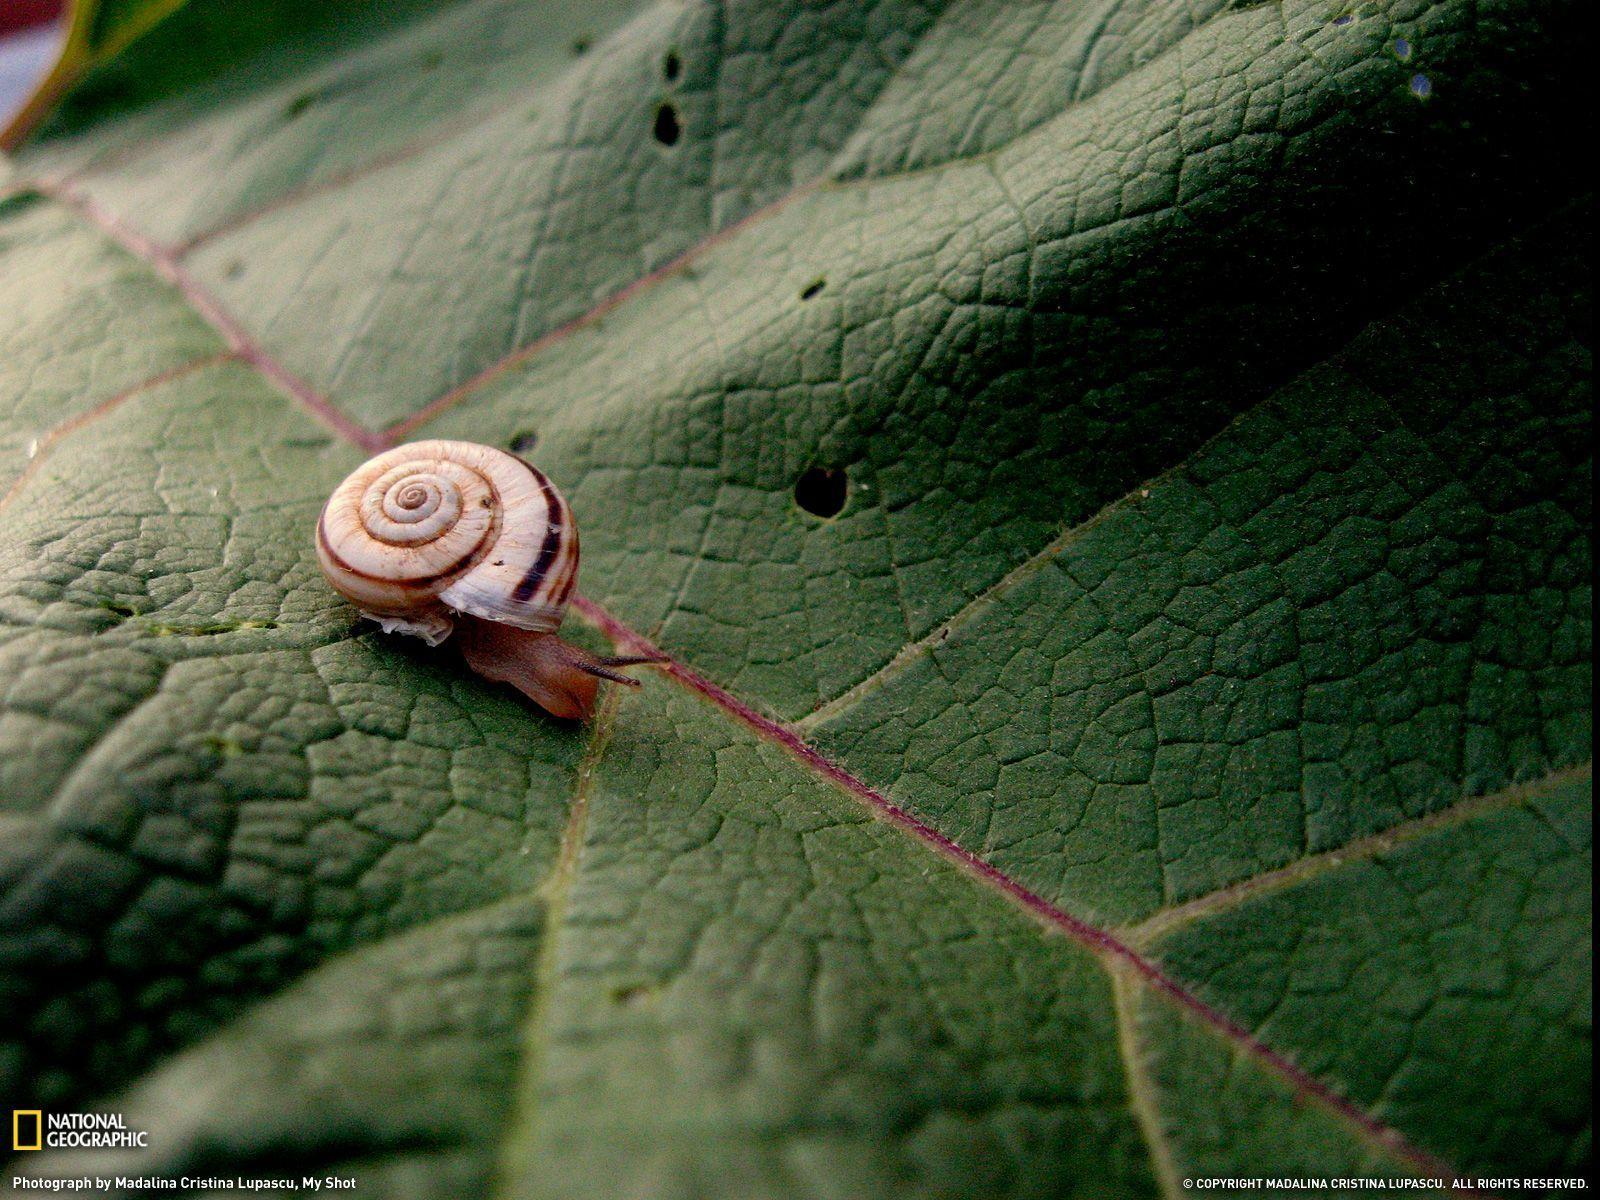 Snail Photo